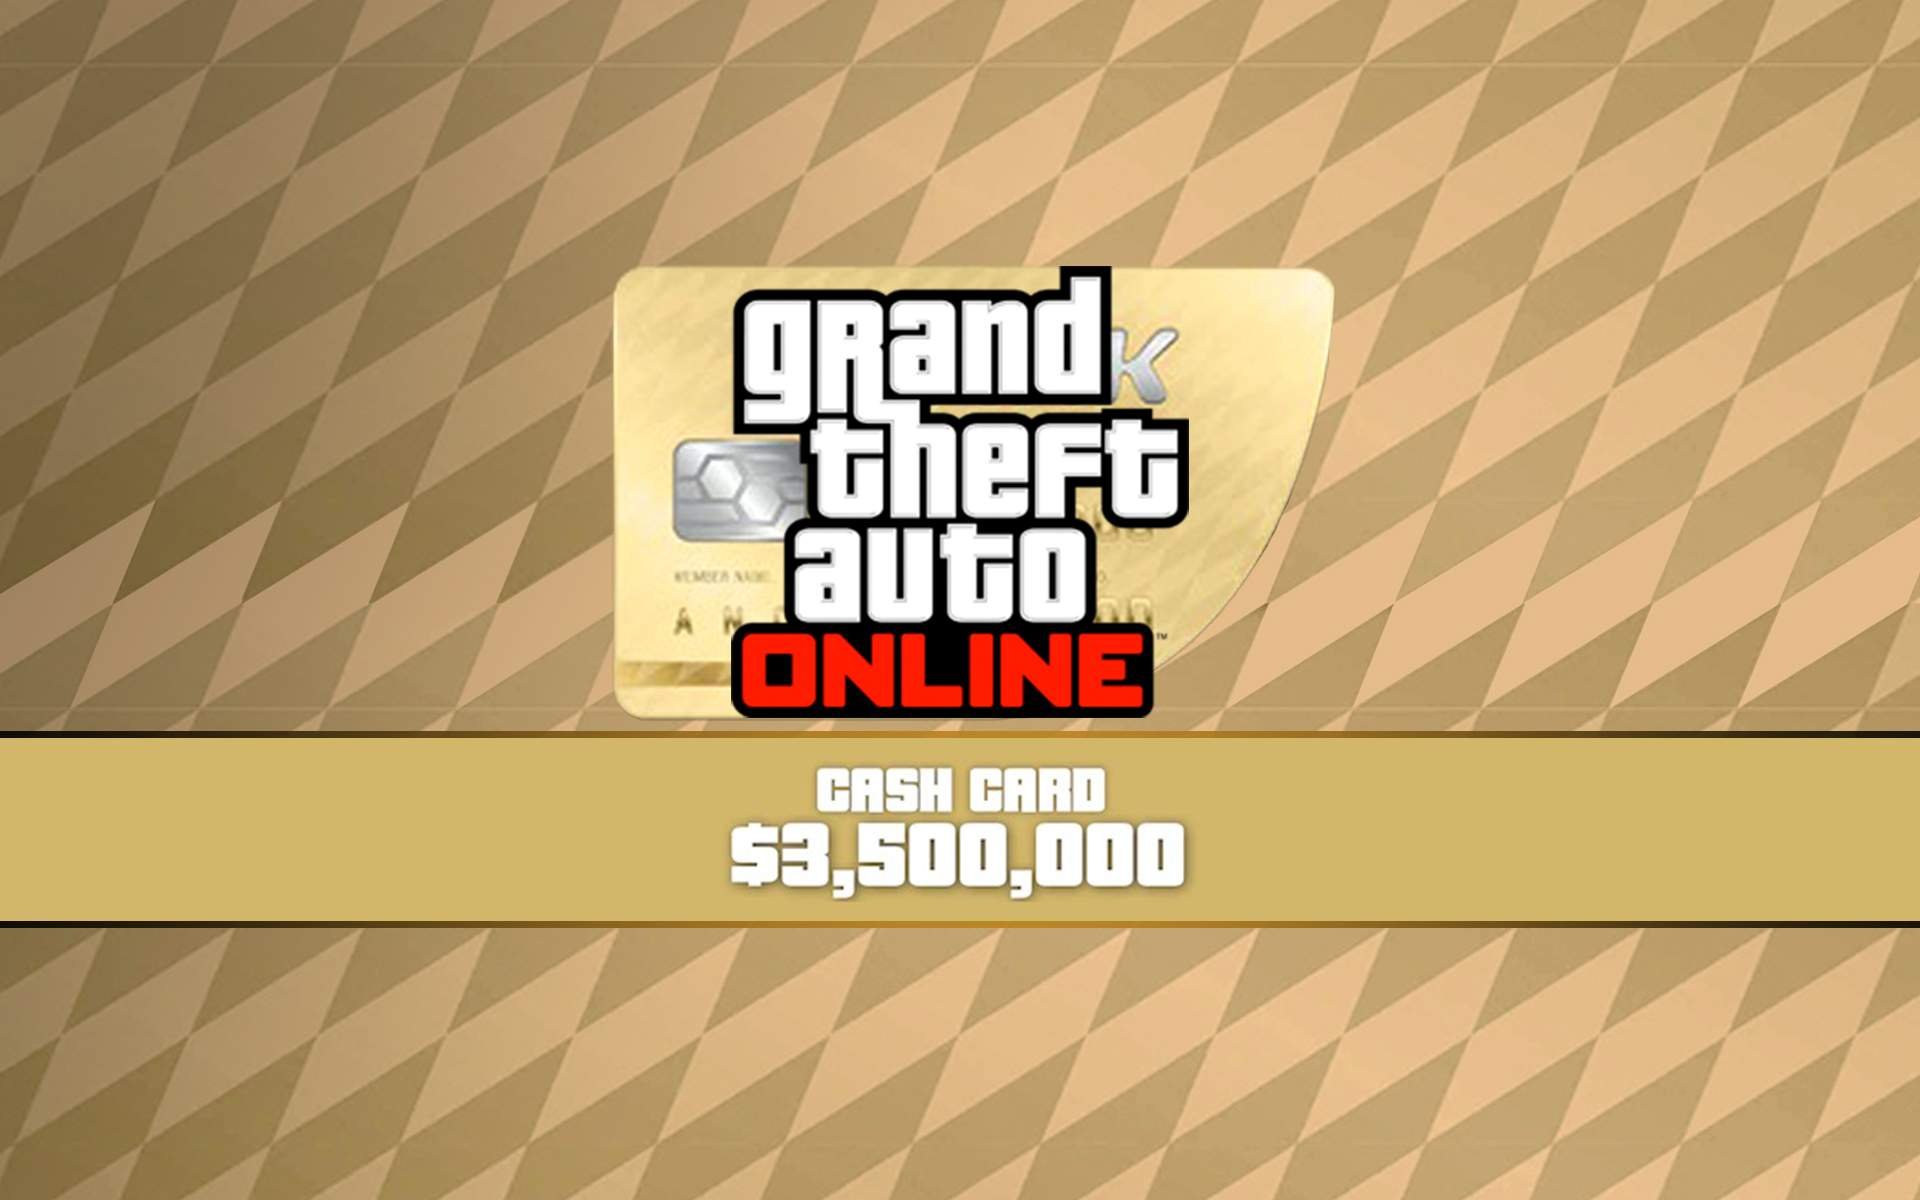 Grand Theft Auto Online Whale Shark Cash Card